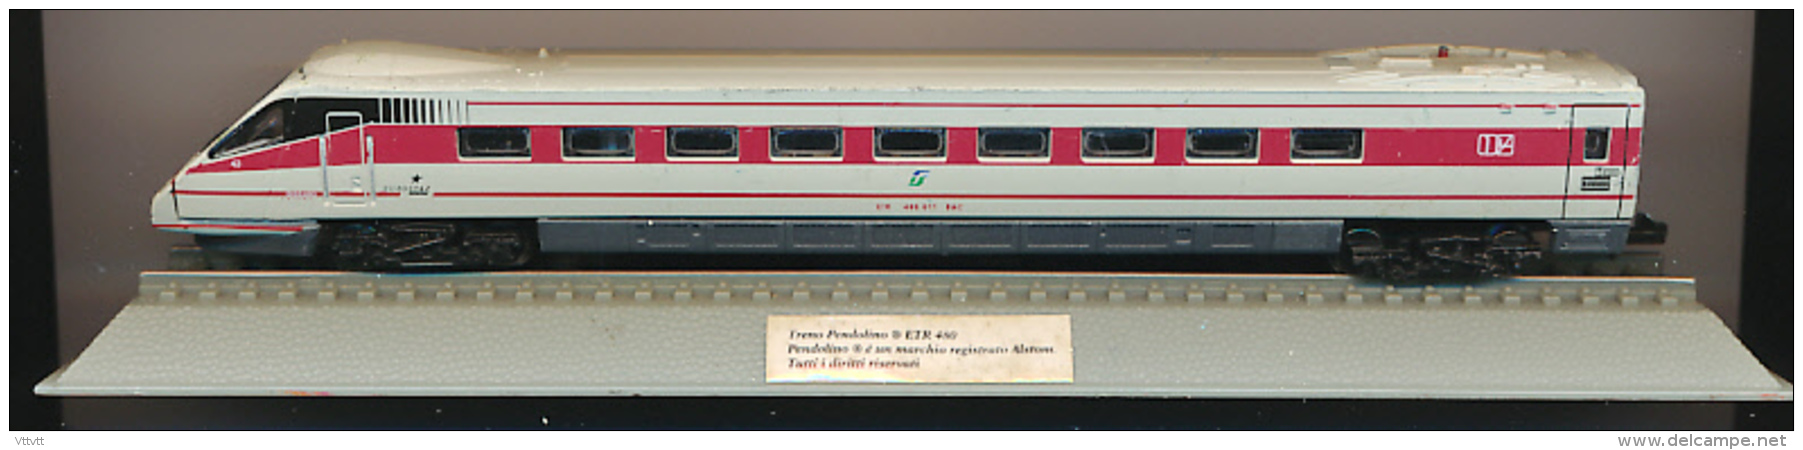 Locomotive : FS ETR 480 "Pendolino", Echelle N 1/160, G = 9 Mm, Italy, Italie - Locomotives